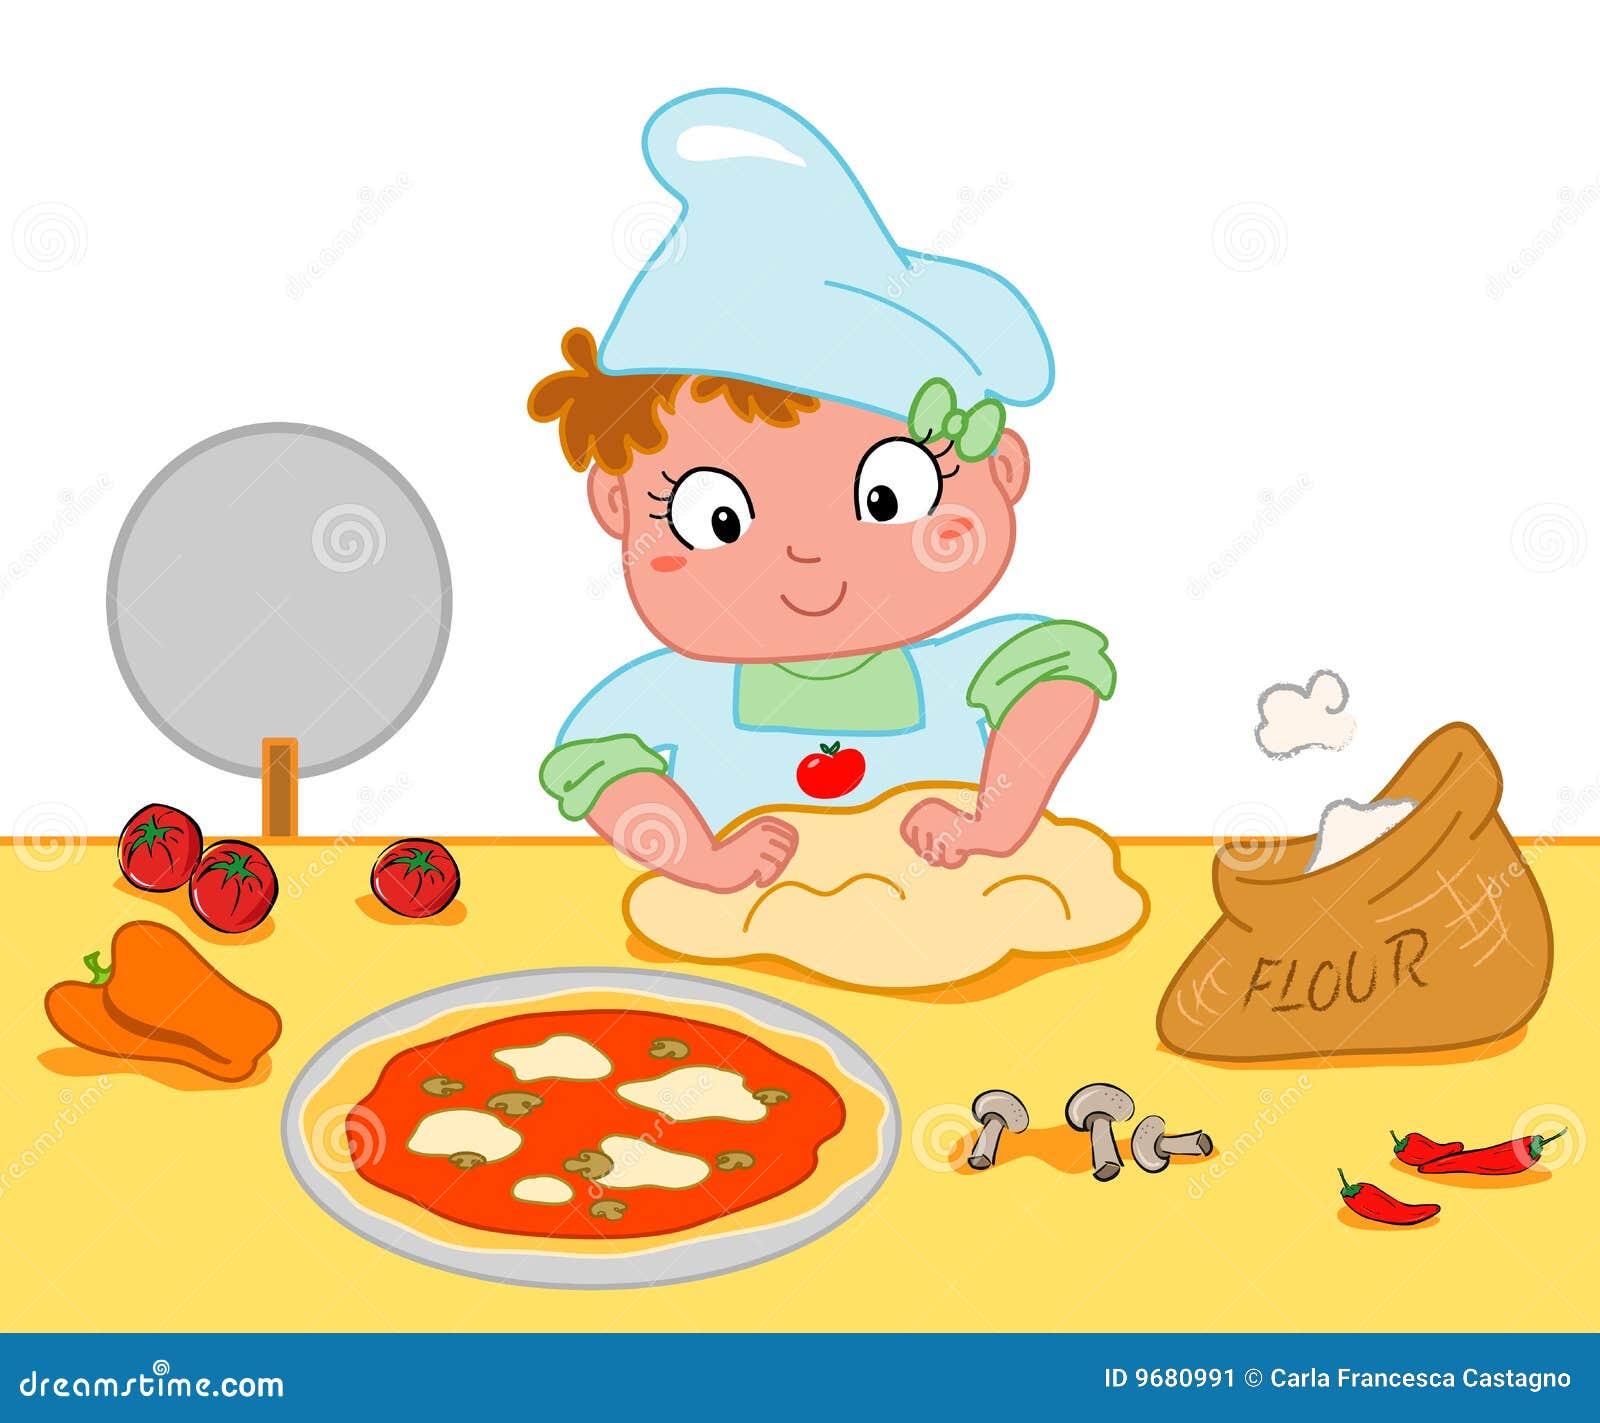 https://thumbs.dreamstime.com/z/girl-making-pizza-9680991.jpg